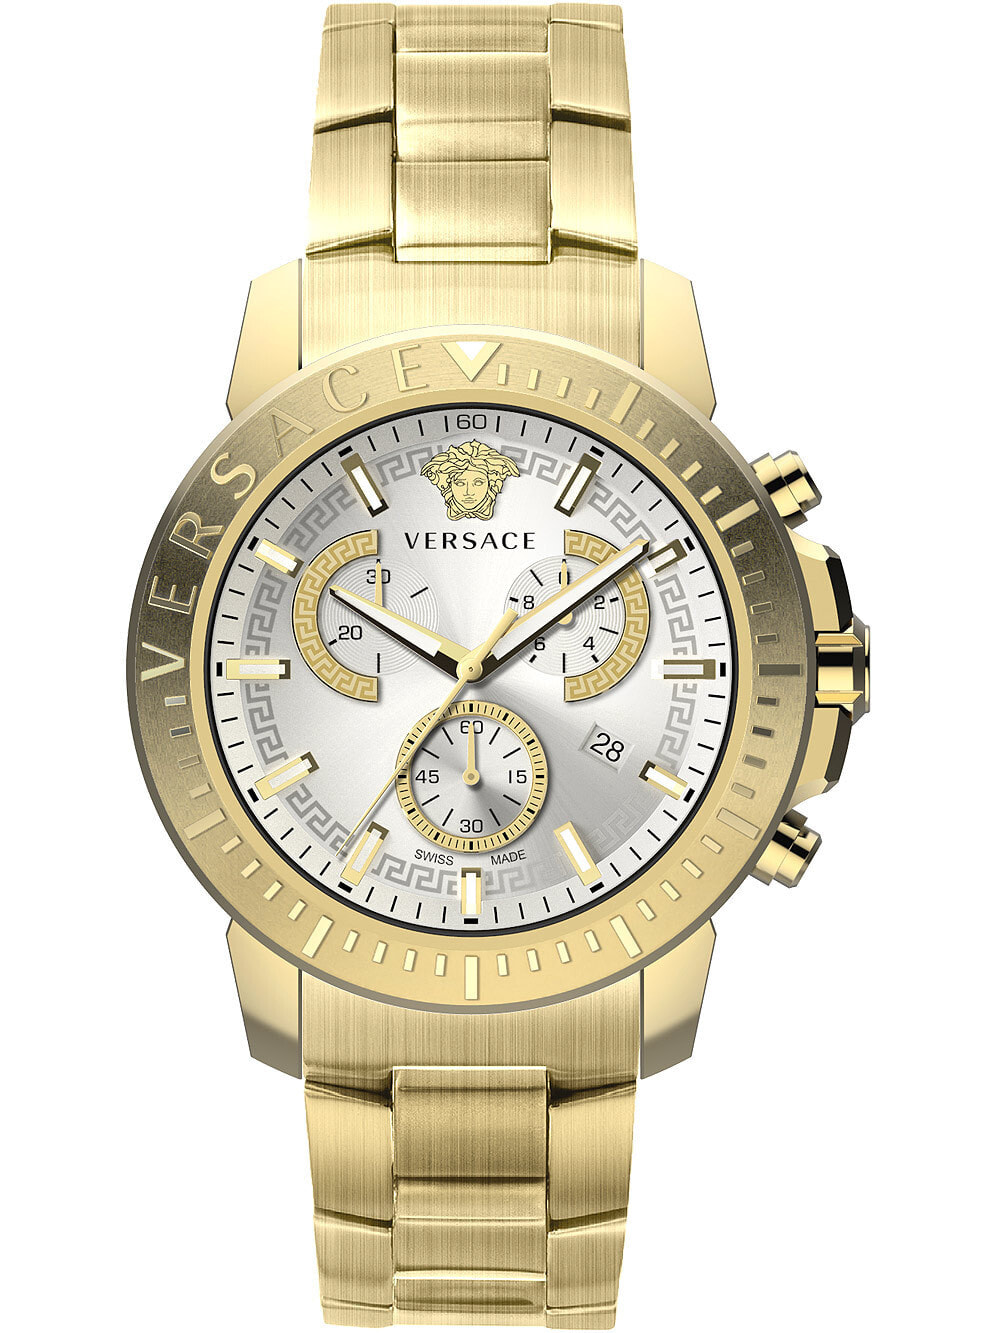 Мужские наручные часы с золотым браслетом Versace VE2E00521 New Chrono 45mm 5ATM